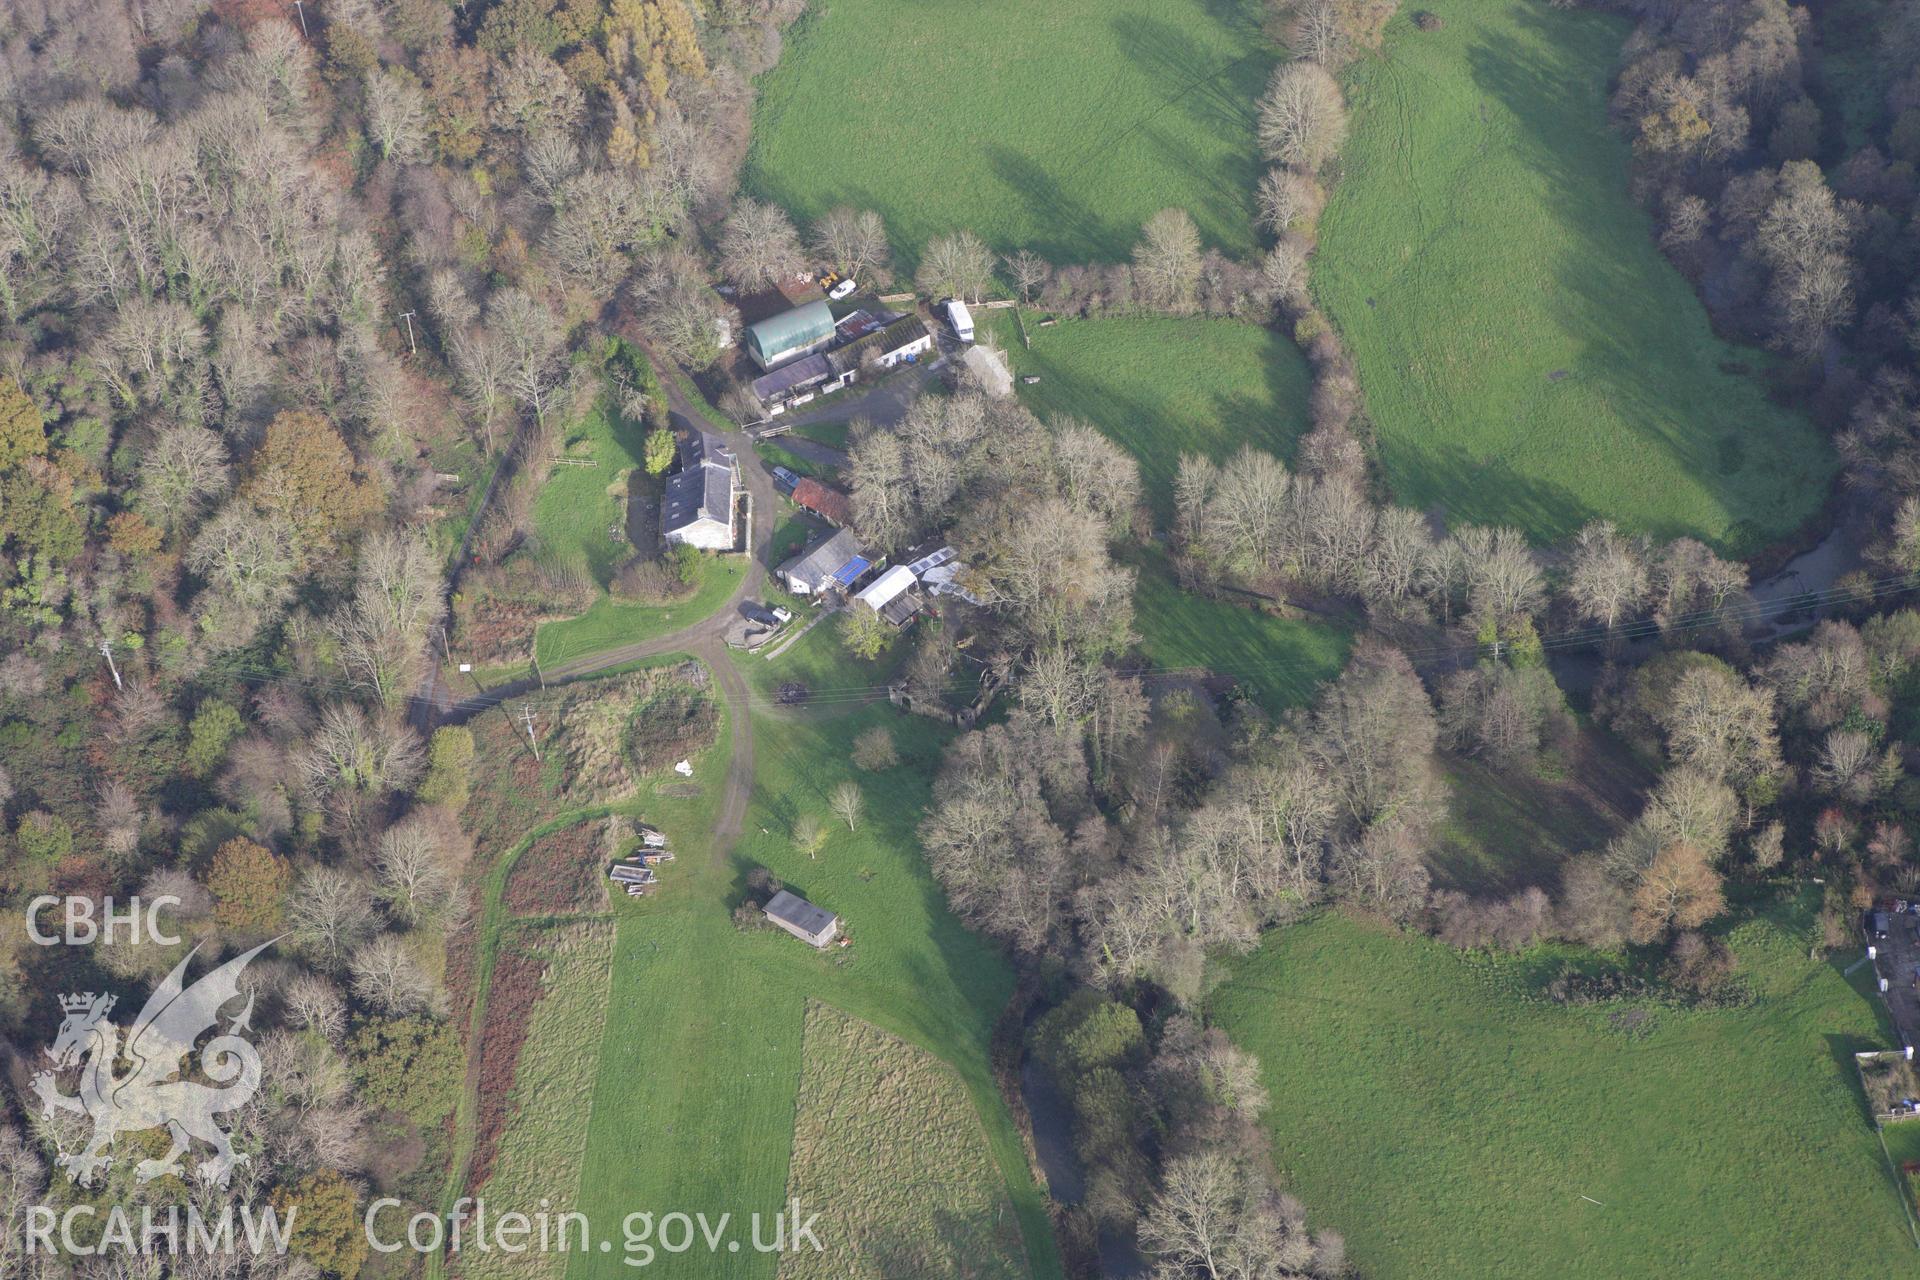 RCAHMW colour oblique aerial photograph of Felin Geri, Cwm Cou. Taken on 09 November 2009 by Toby Driver